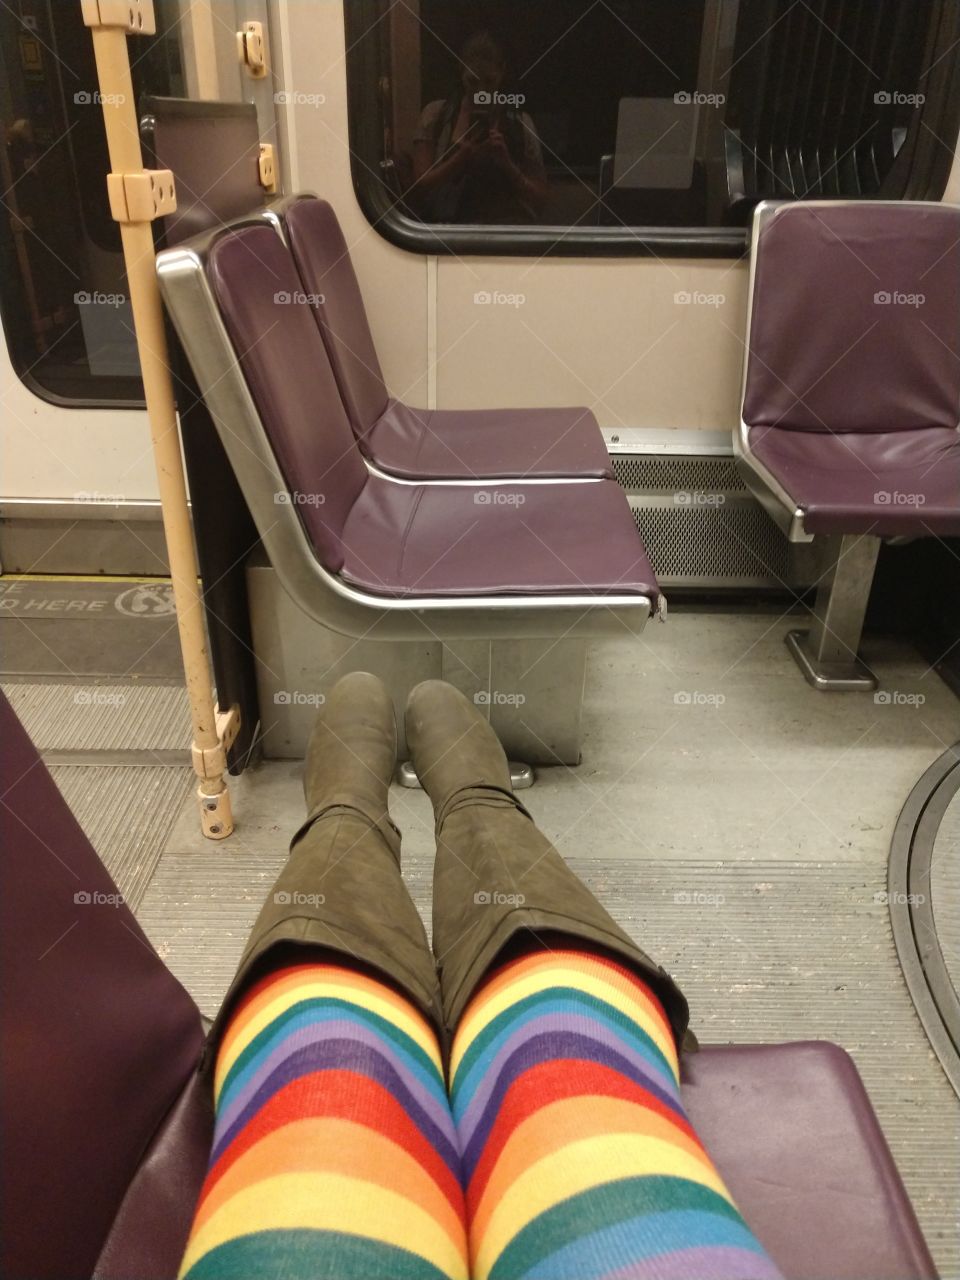 Rainbow socks riding on the Max lightrail train in Portland, OR.